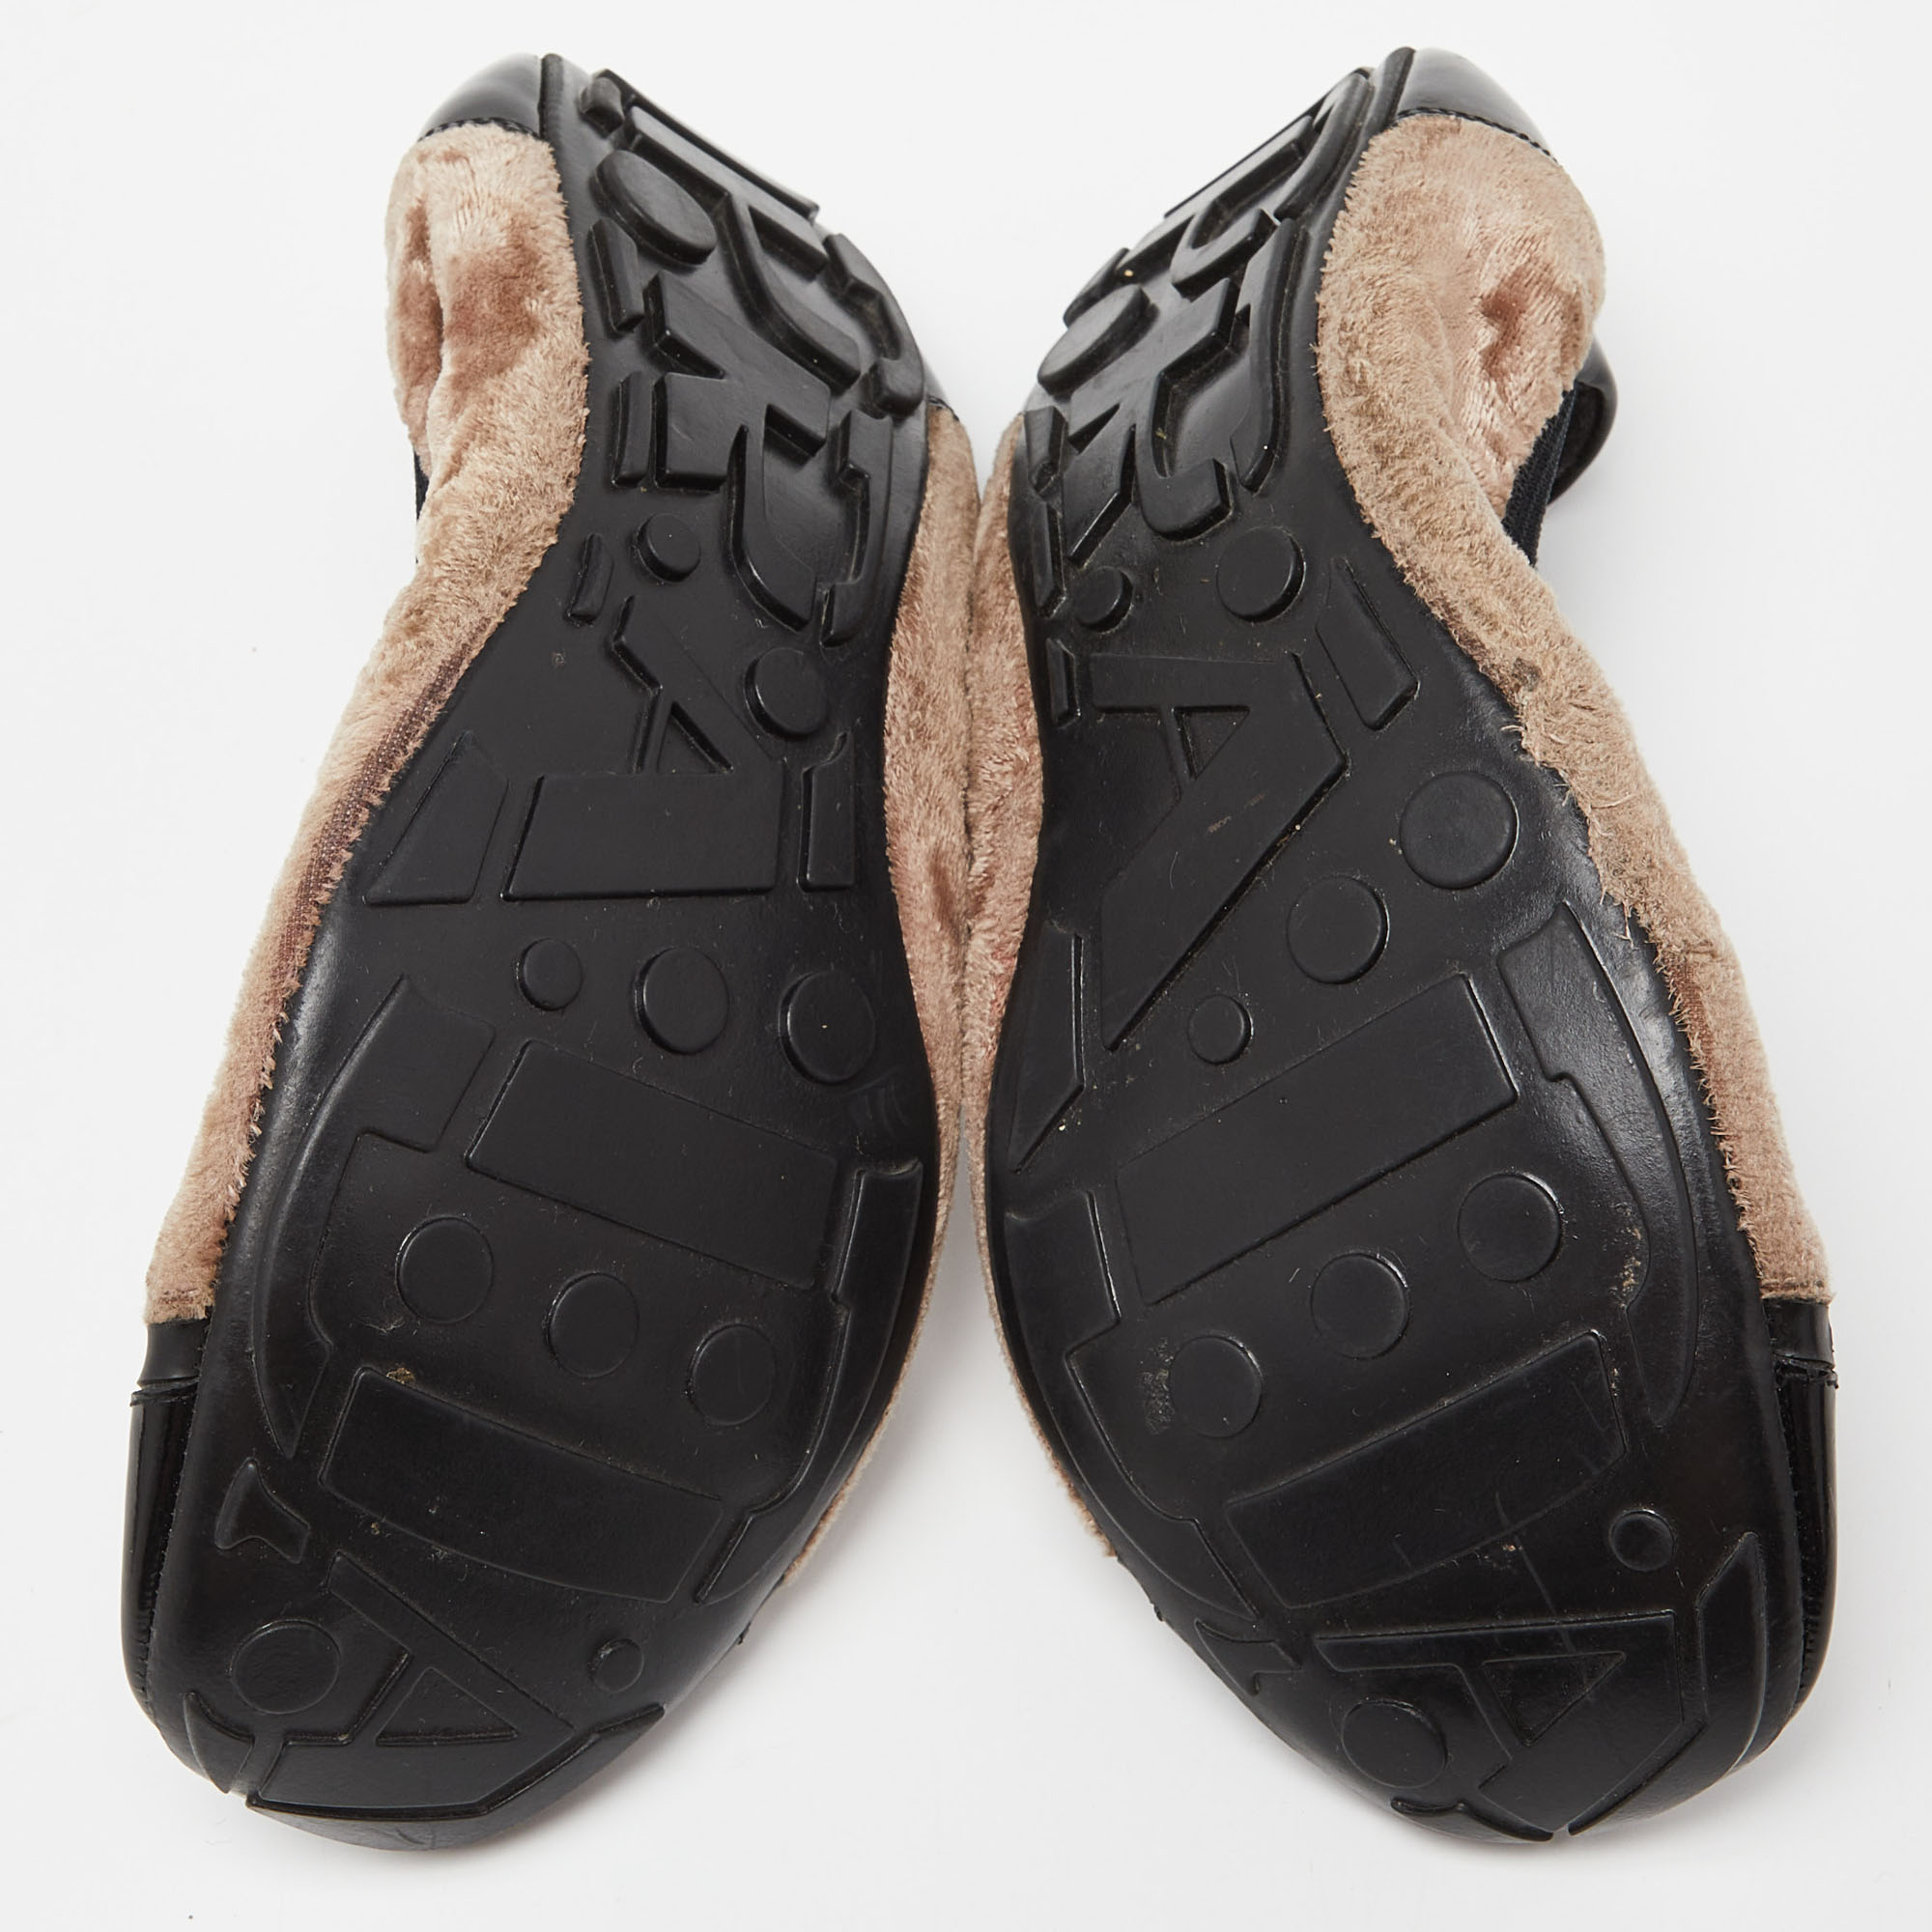 Prada Sport Black/Brown Patent Leather And Velvet Toe Cap Scrunch Ballet Flats Size 40.5